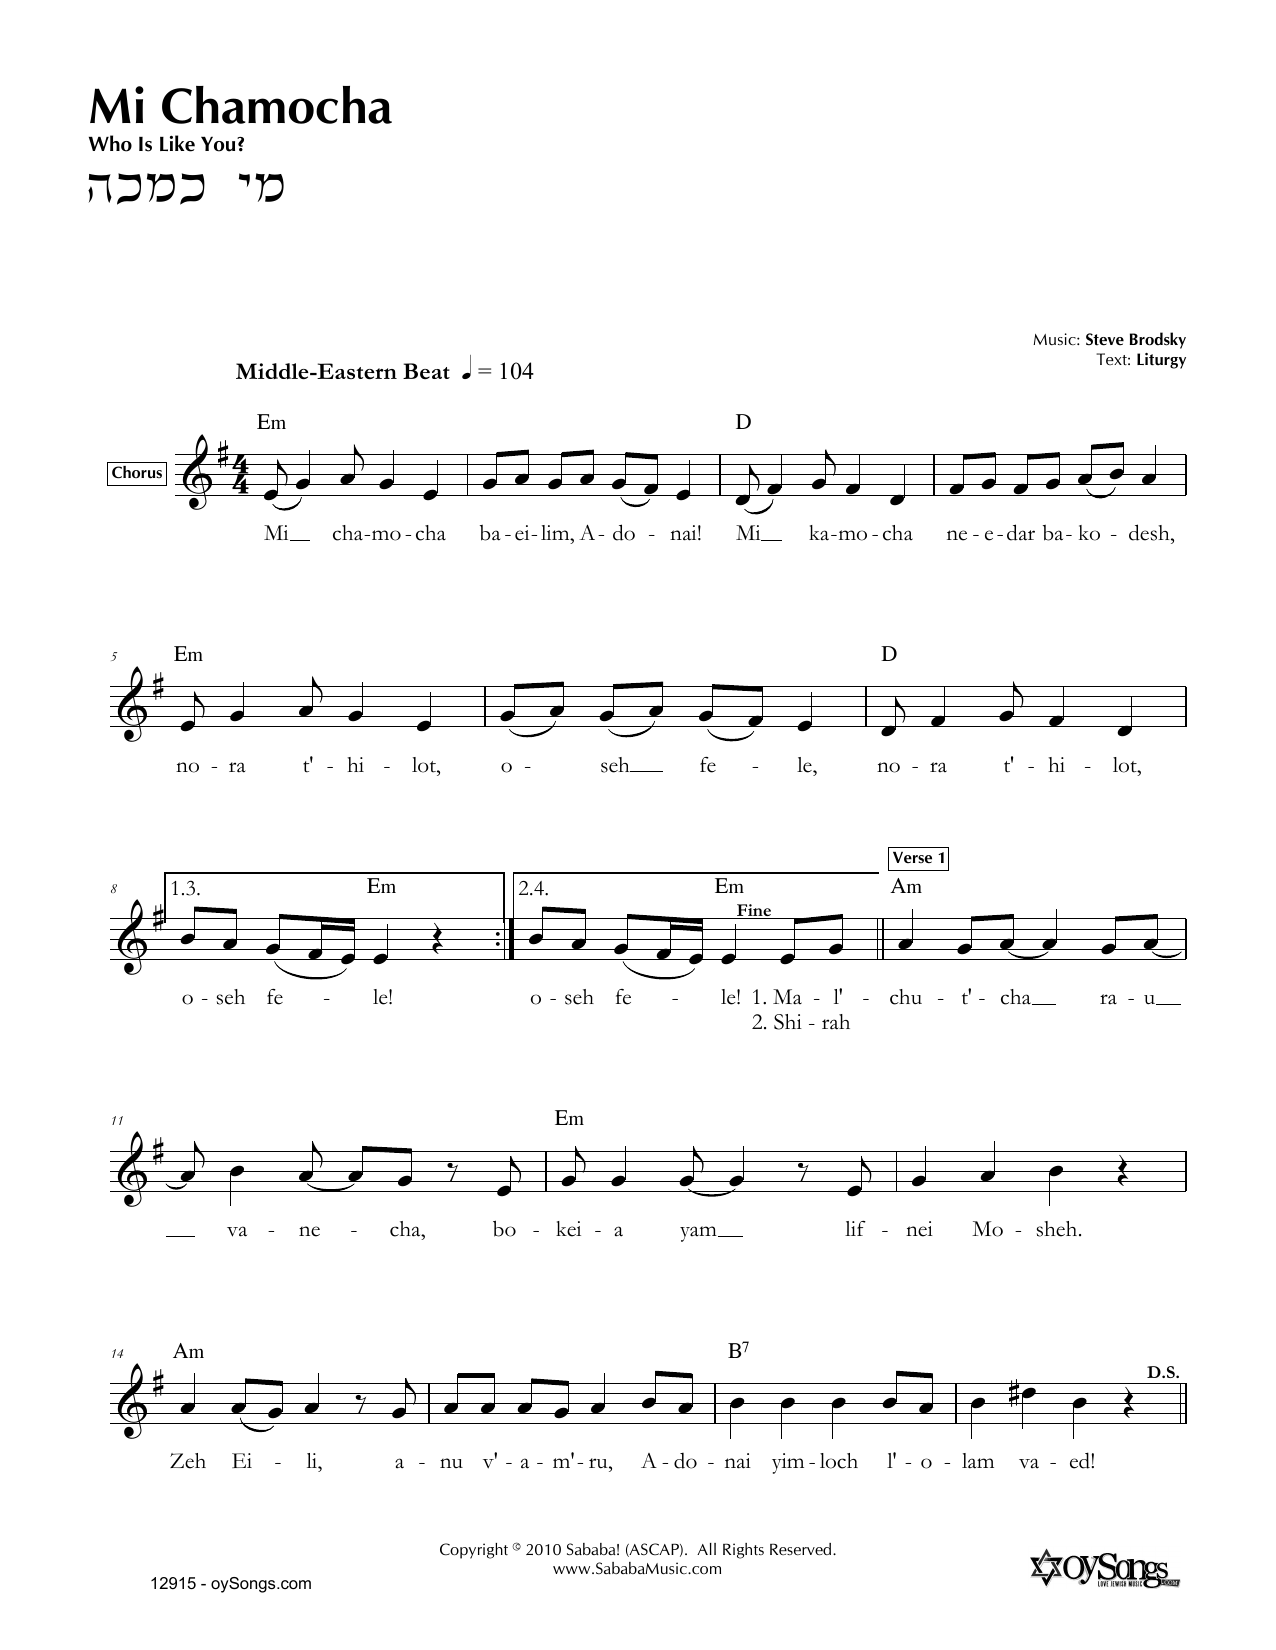 Steve Brodsky Mi Chamocha Sheet Music Notes & Chords for Melody Line, Lyrics & Chords - Download or Print PDF